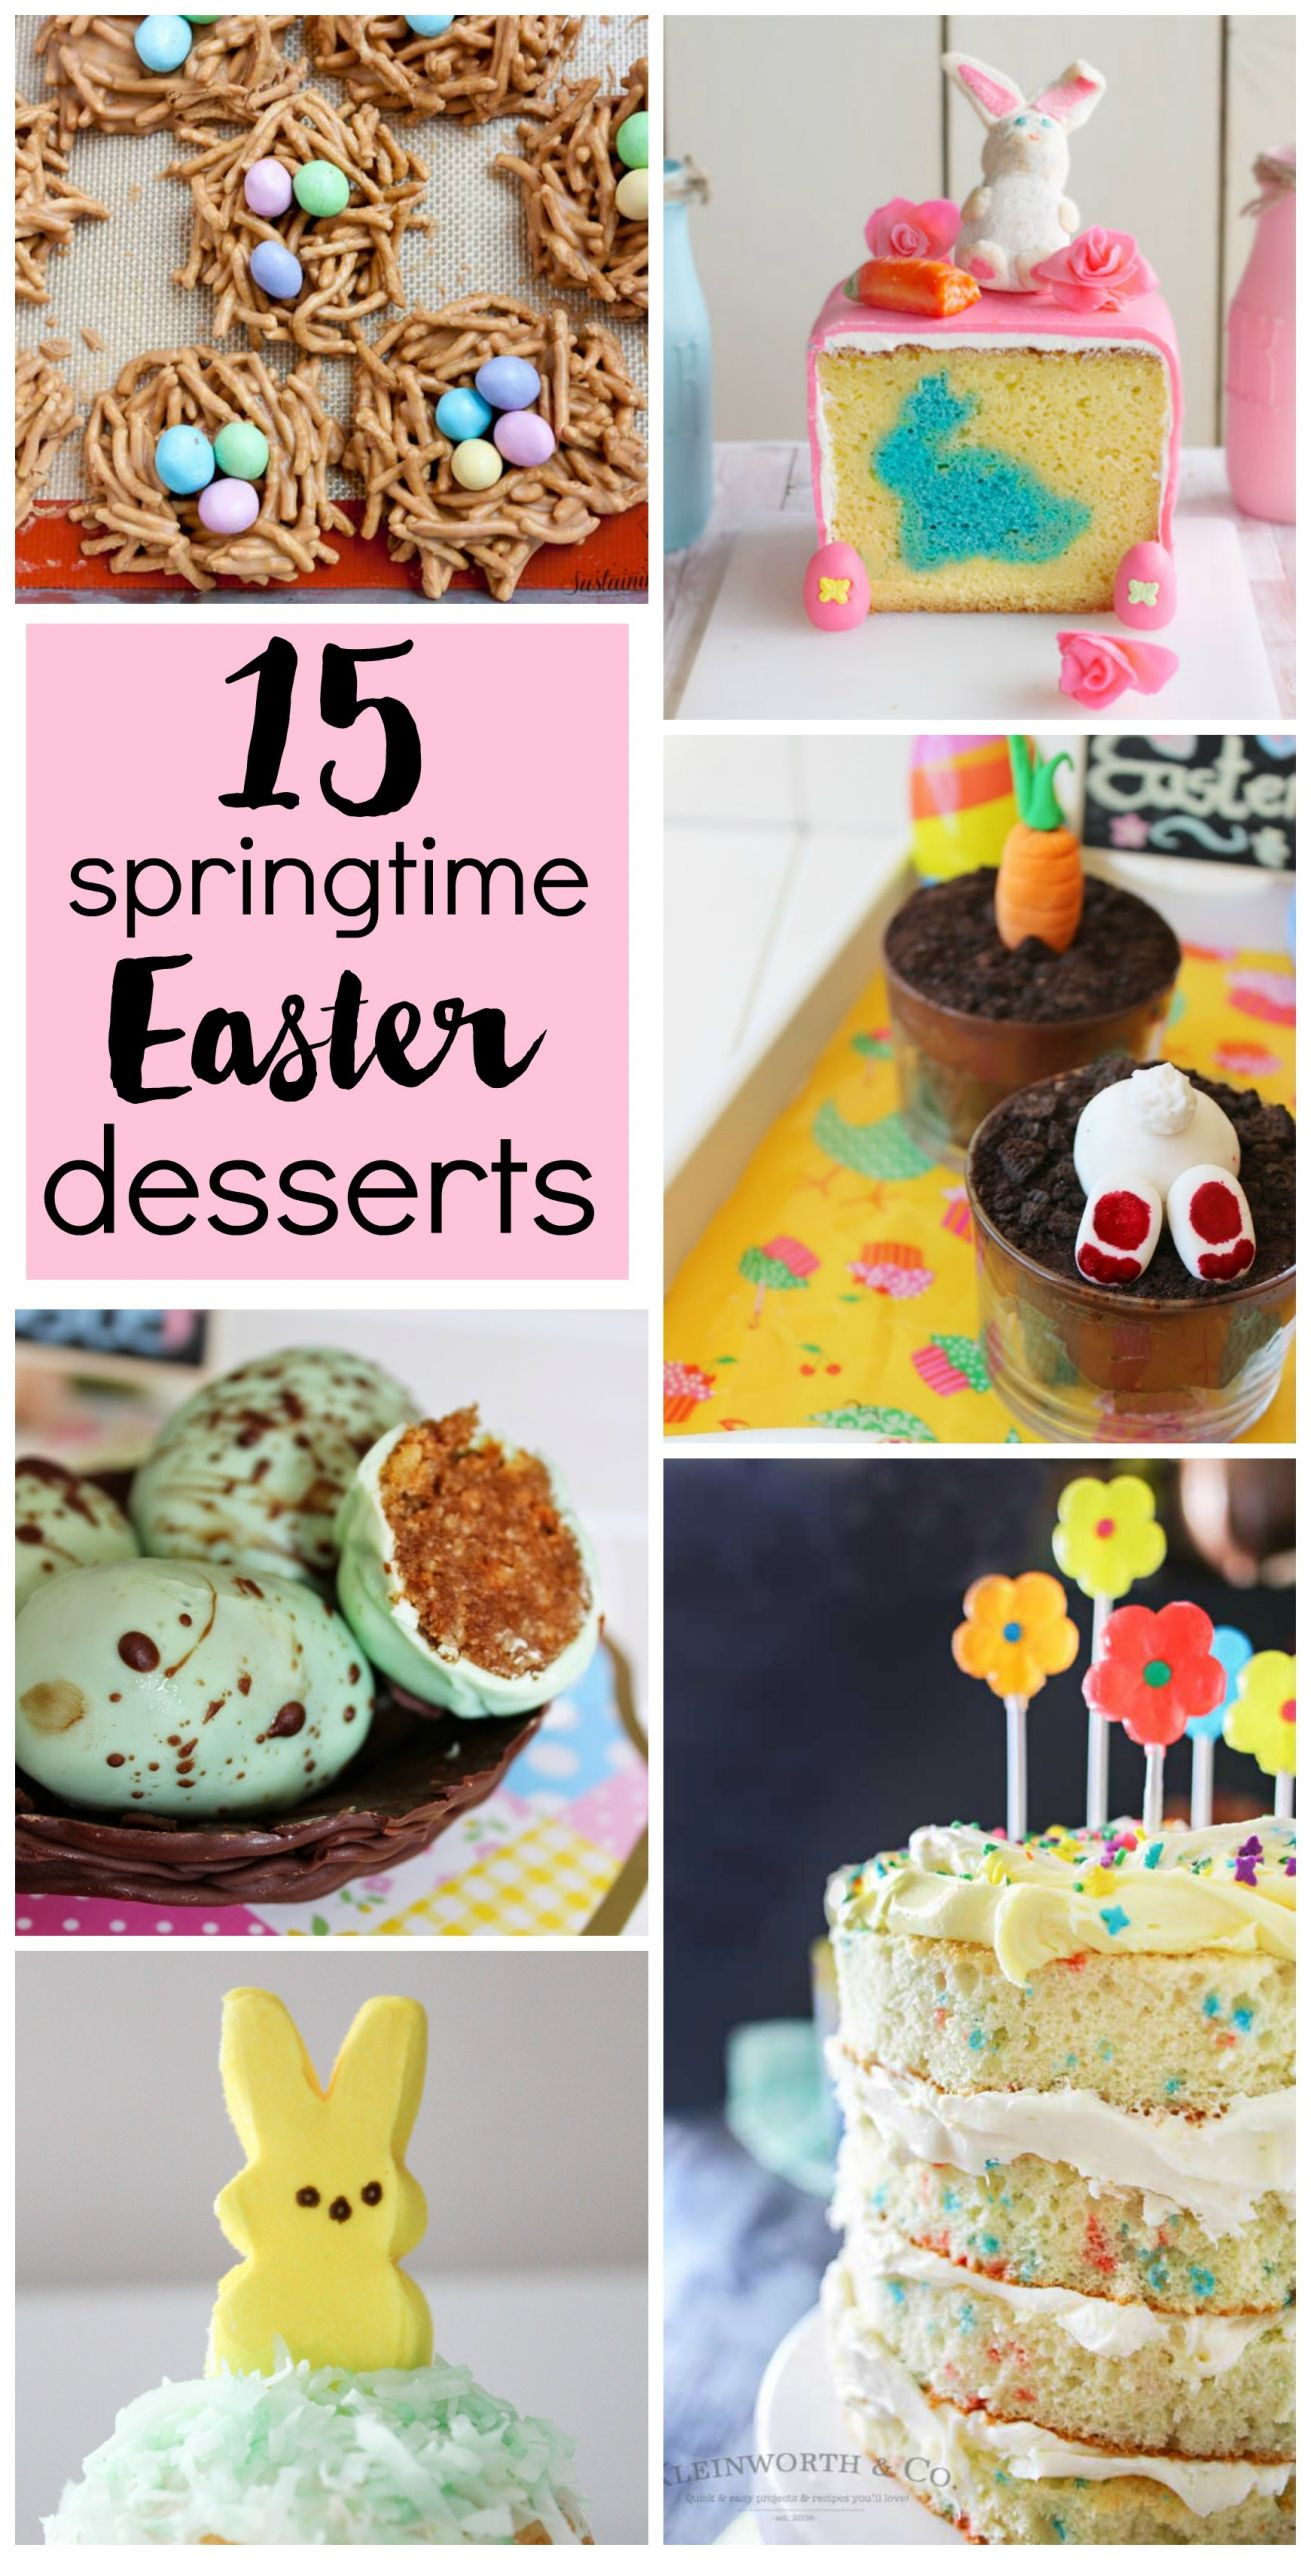 Martha Stewart Easter Desserts
 Top 24 Martha Stewart Easter Desserts – Home Family